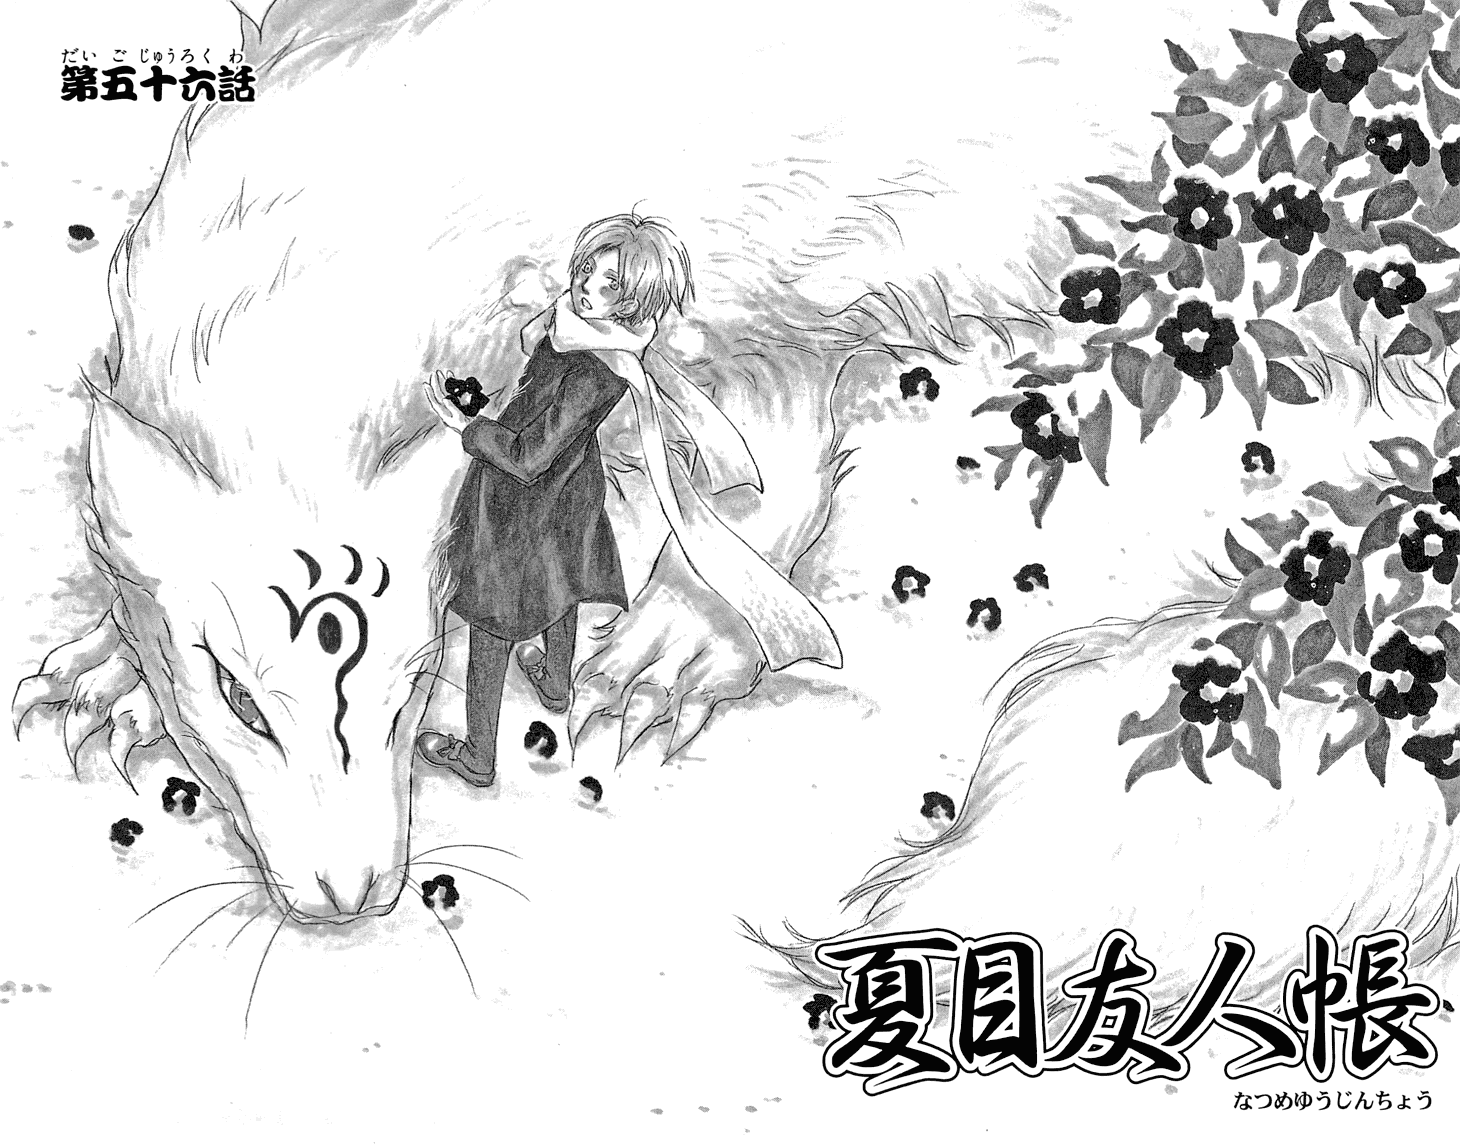 Natsume Yuujinchou Vol.14-Chapter.56-Chapter-56 Image